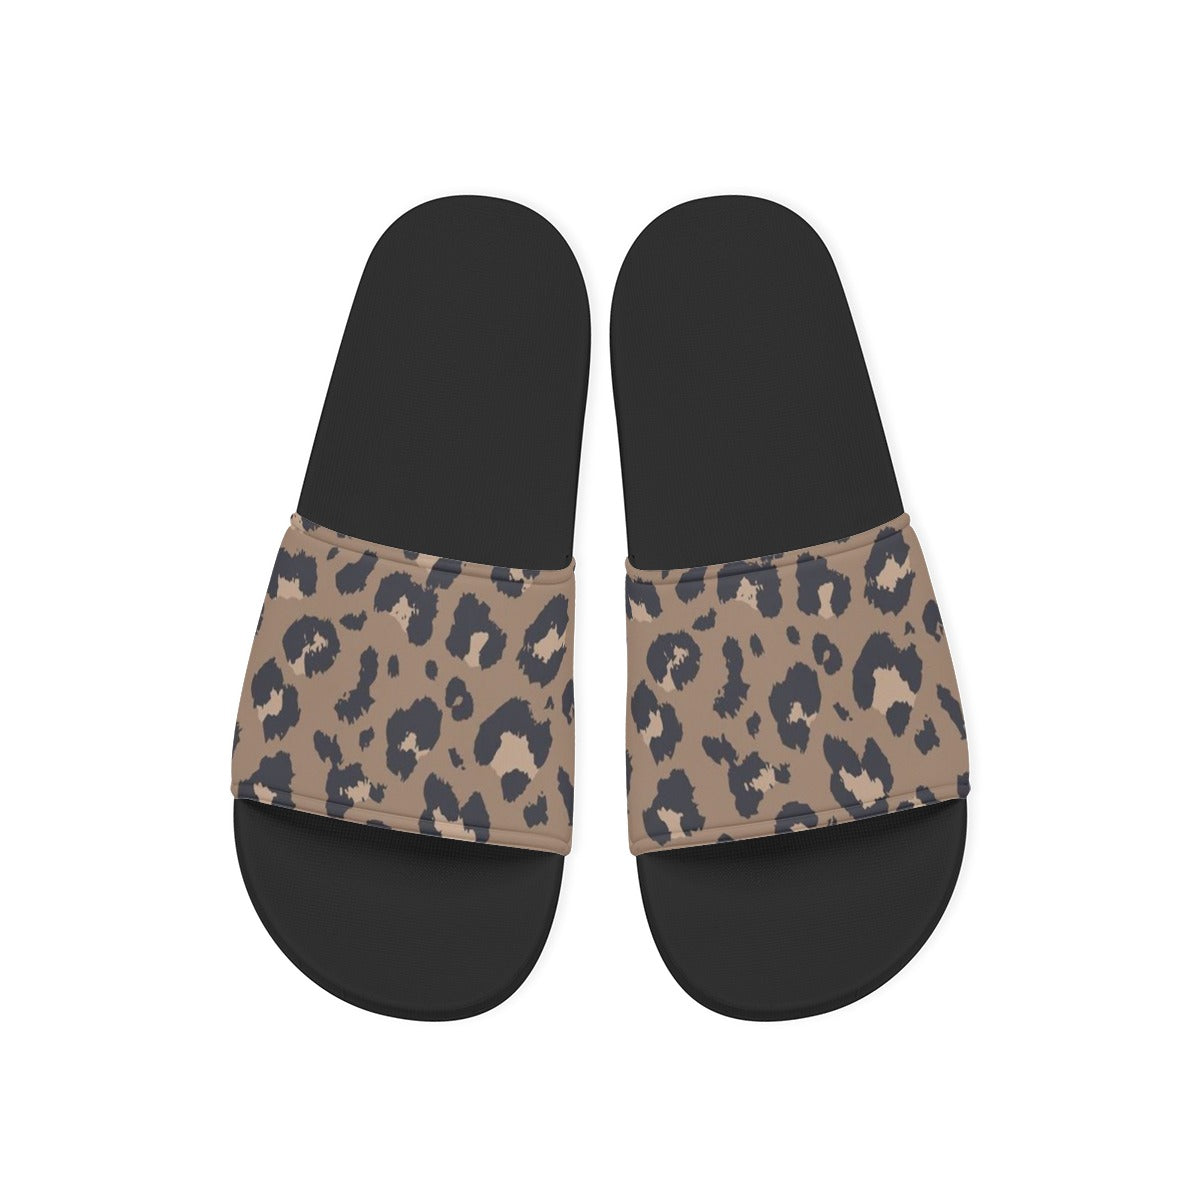 Vintage Leopard Sandals